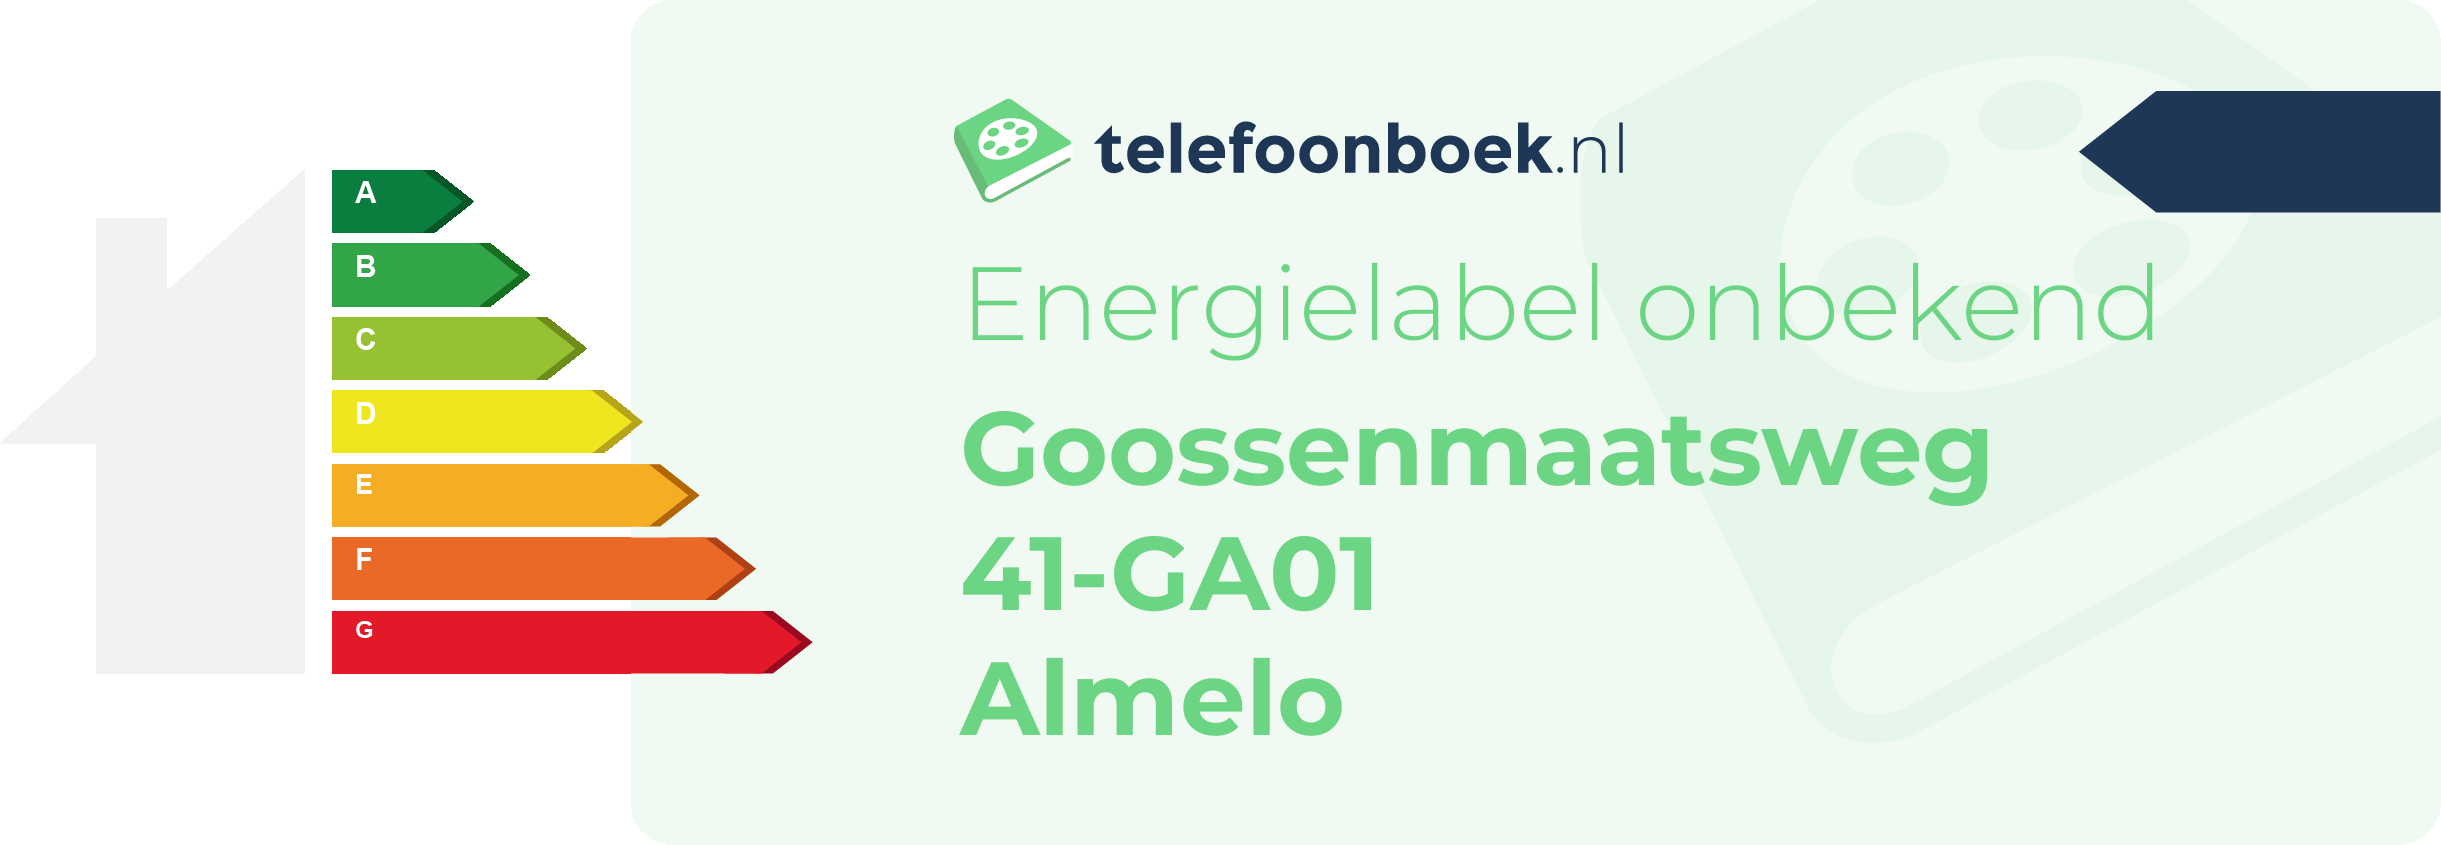 Energielabel Goossenmaatsweg 41-GA01 Almelo